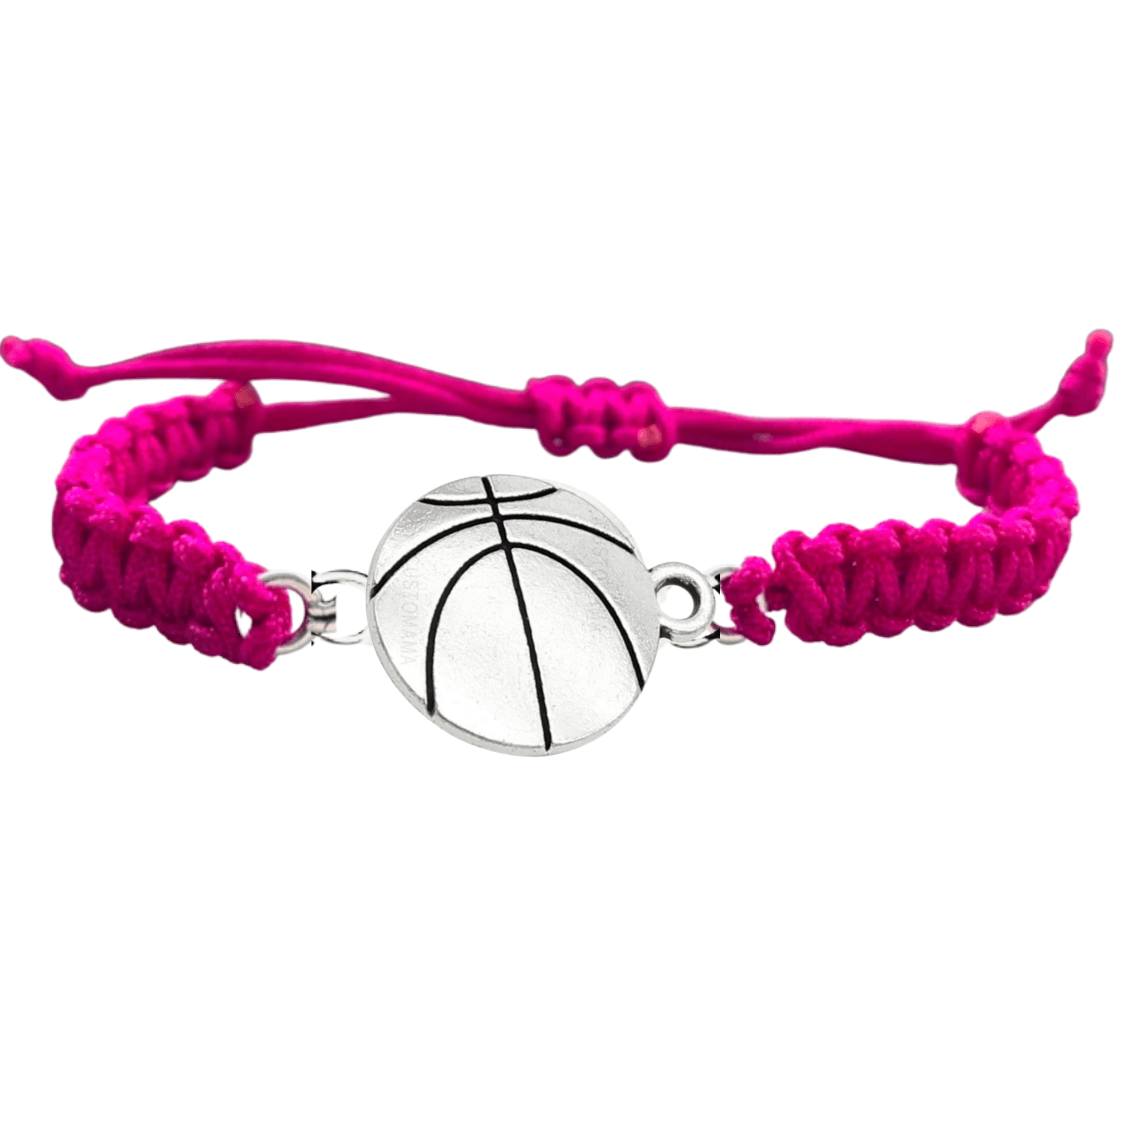 Field Hockey Multi Colored Rope Bracelet - Pick Colors - Sportybella